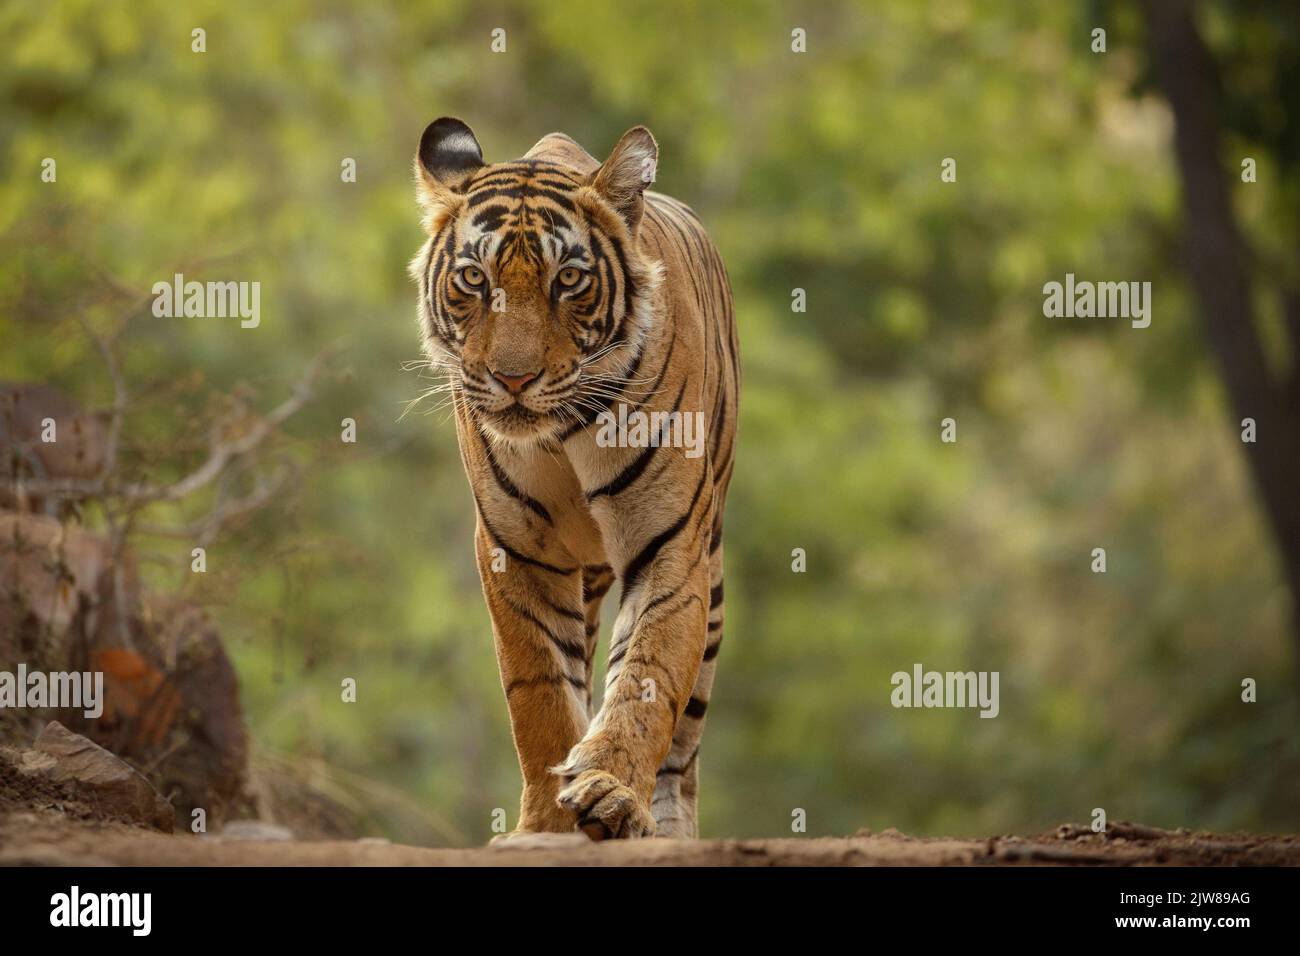 Stock Photo - Portrait of a Royal Bengal Tiger alert and Staring at the Camera. National Animal of Bangladesh Stock Photo